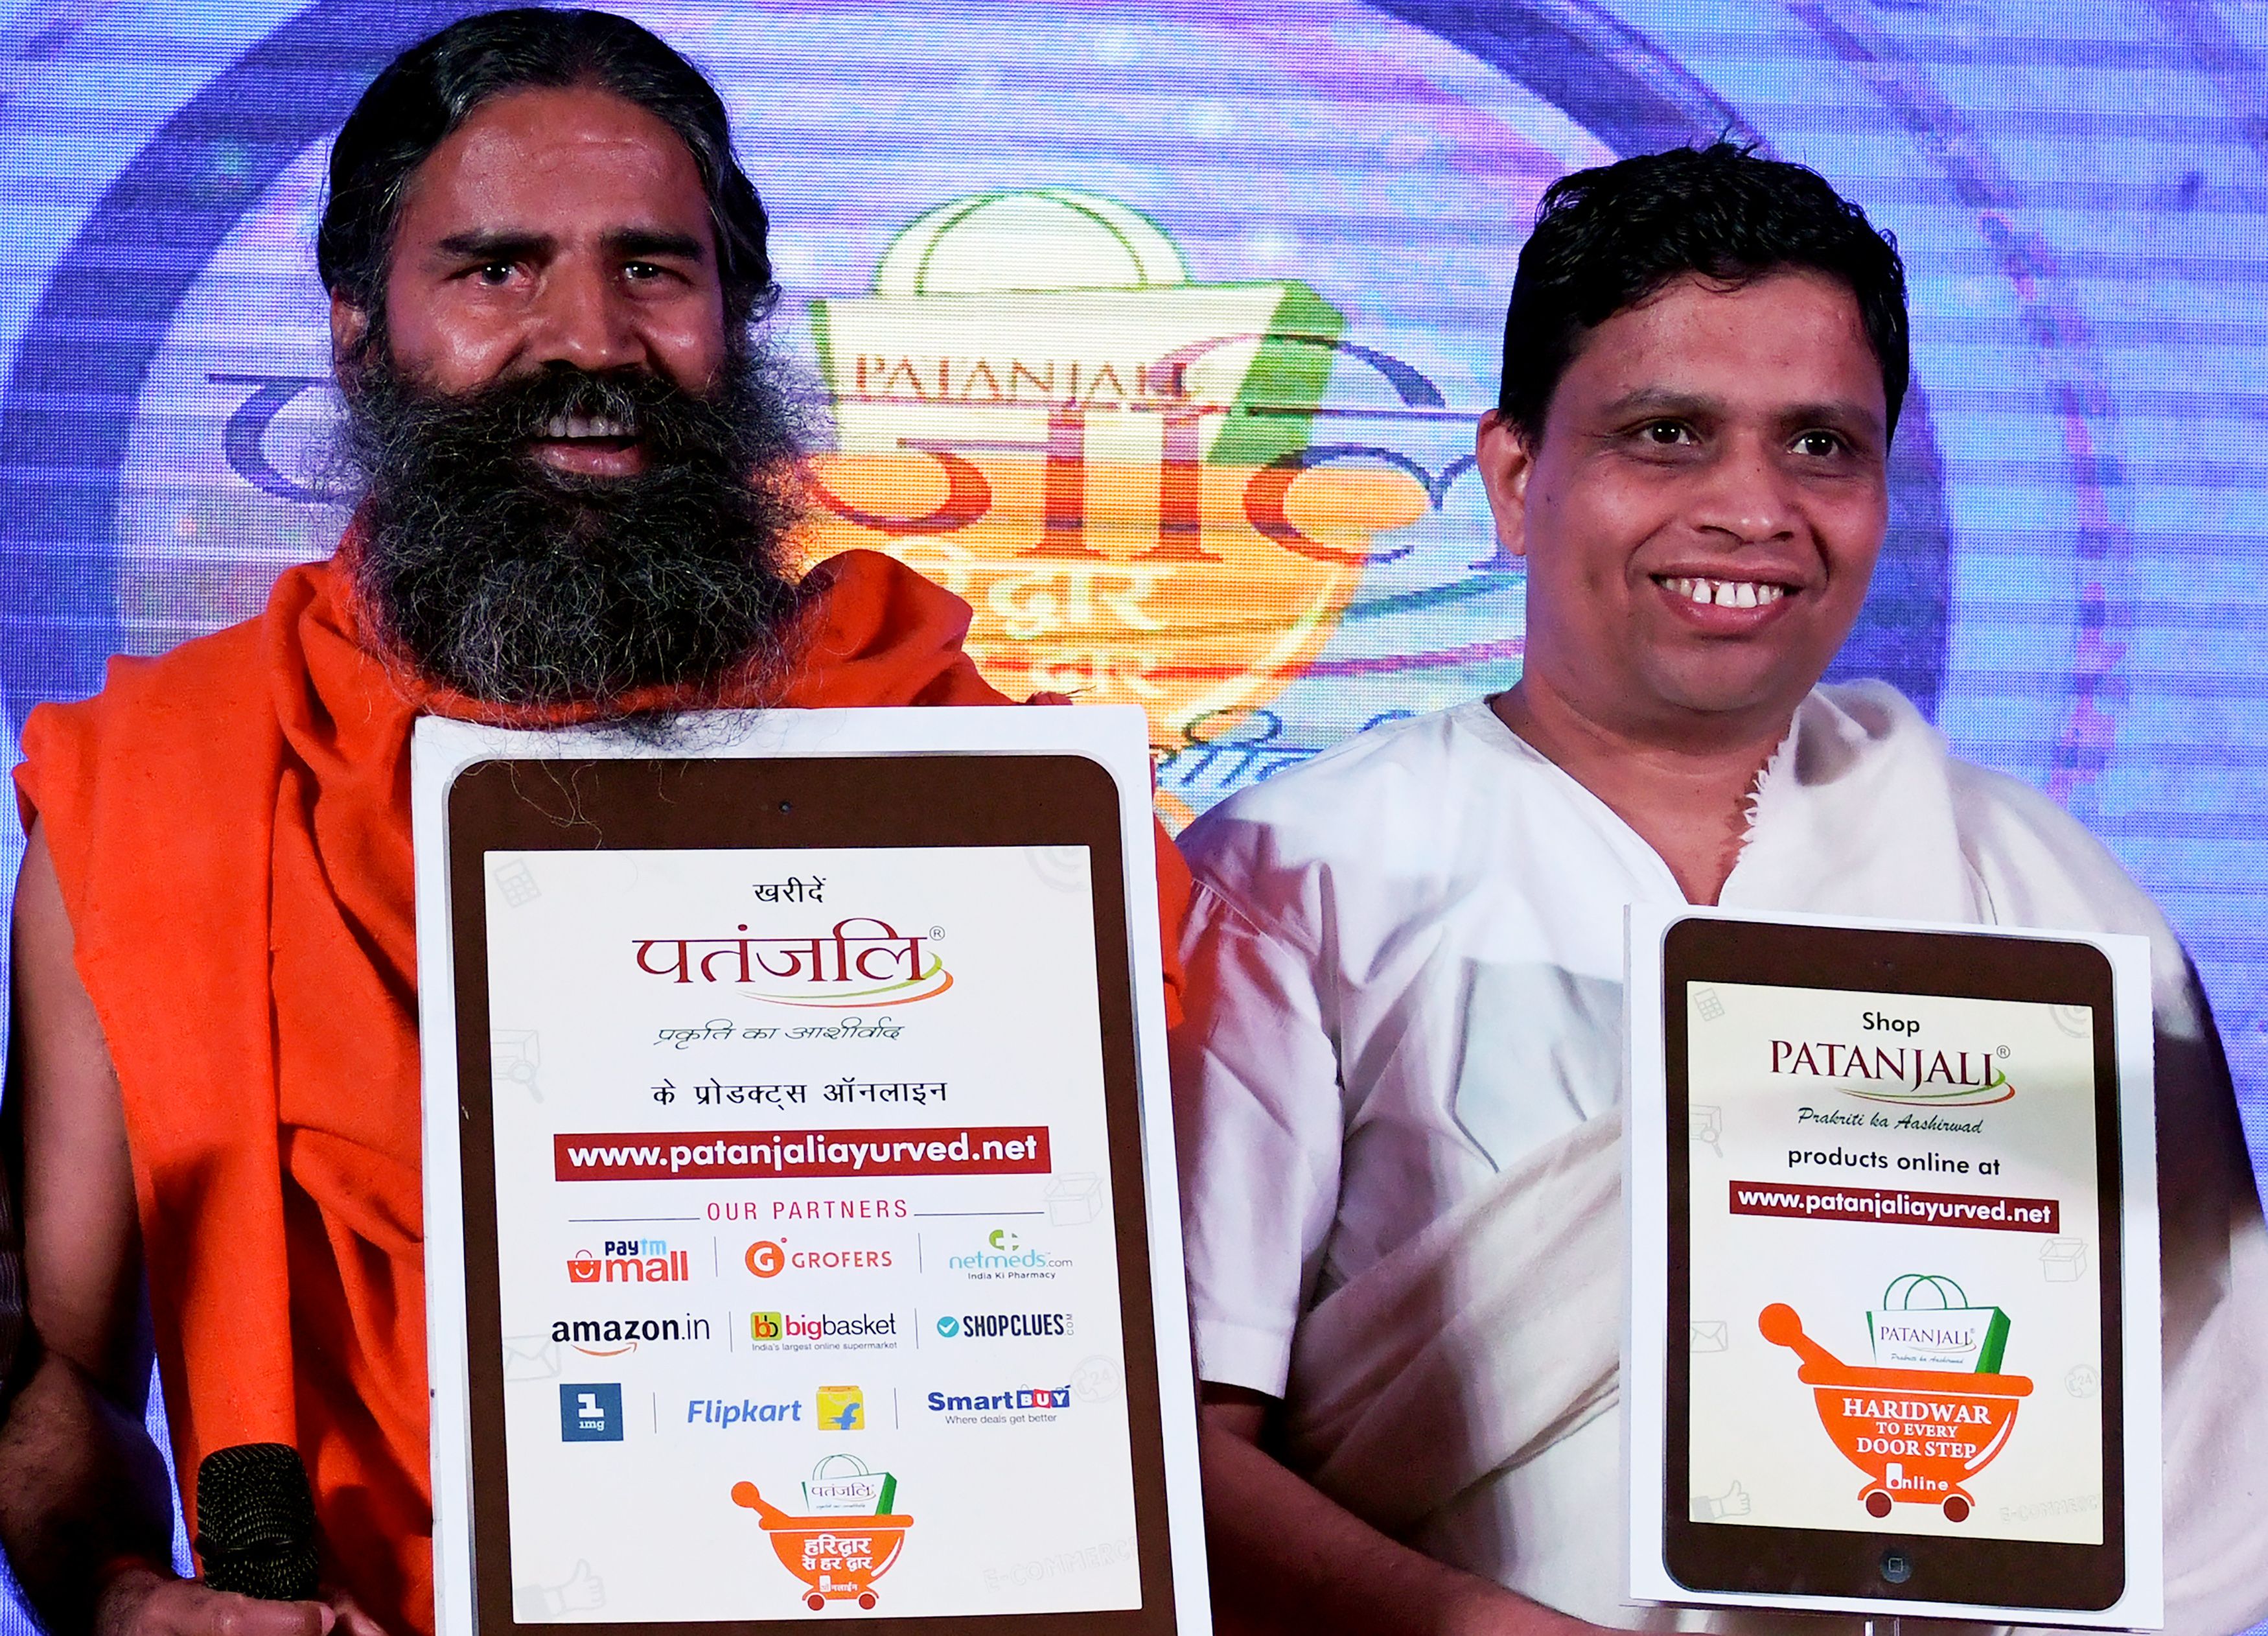 Indian yoga guru Baba Ramdev (L) and Patanjali Ayurveda Managing Director, Acharya Balkrishna, pose for a photo during a press conference in 2018